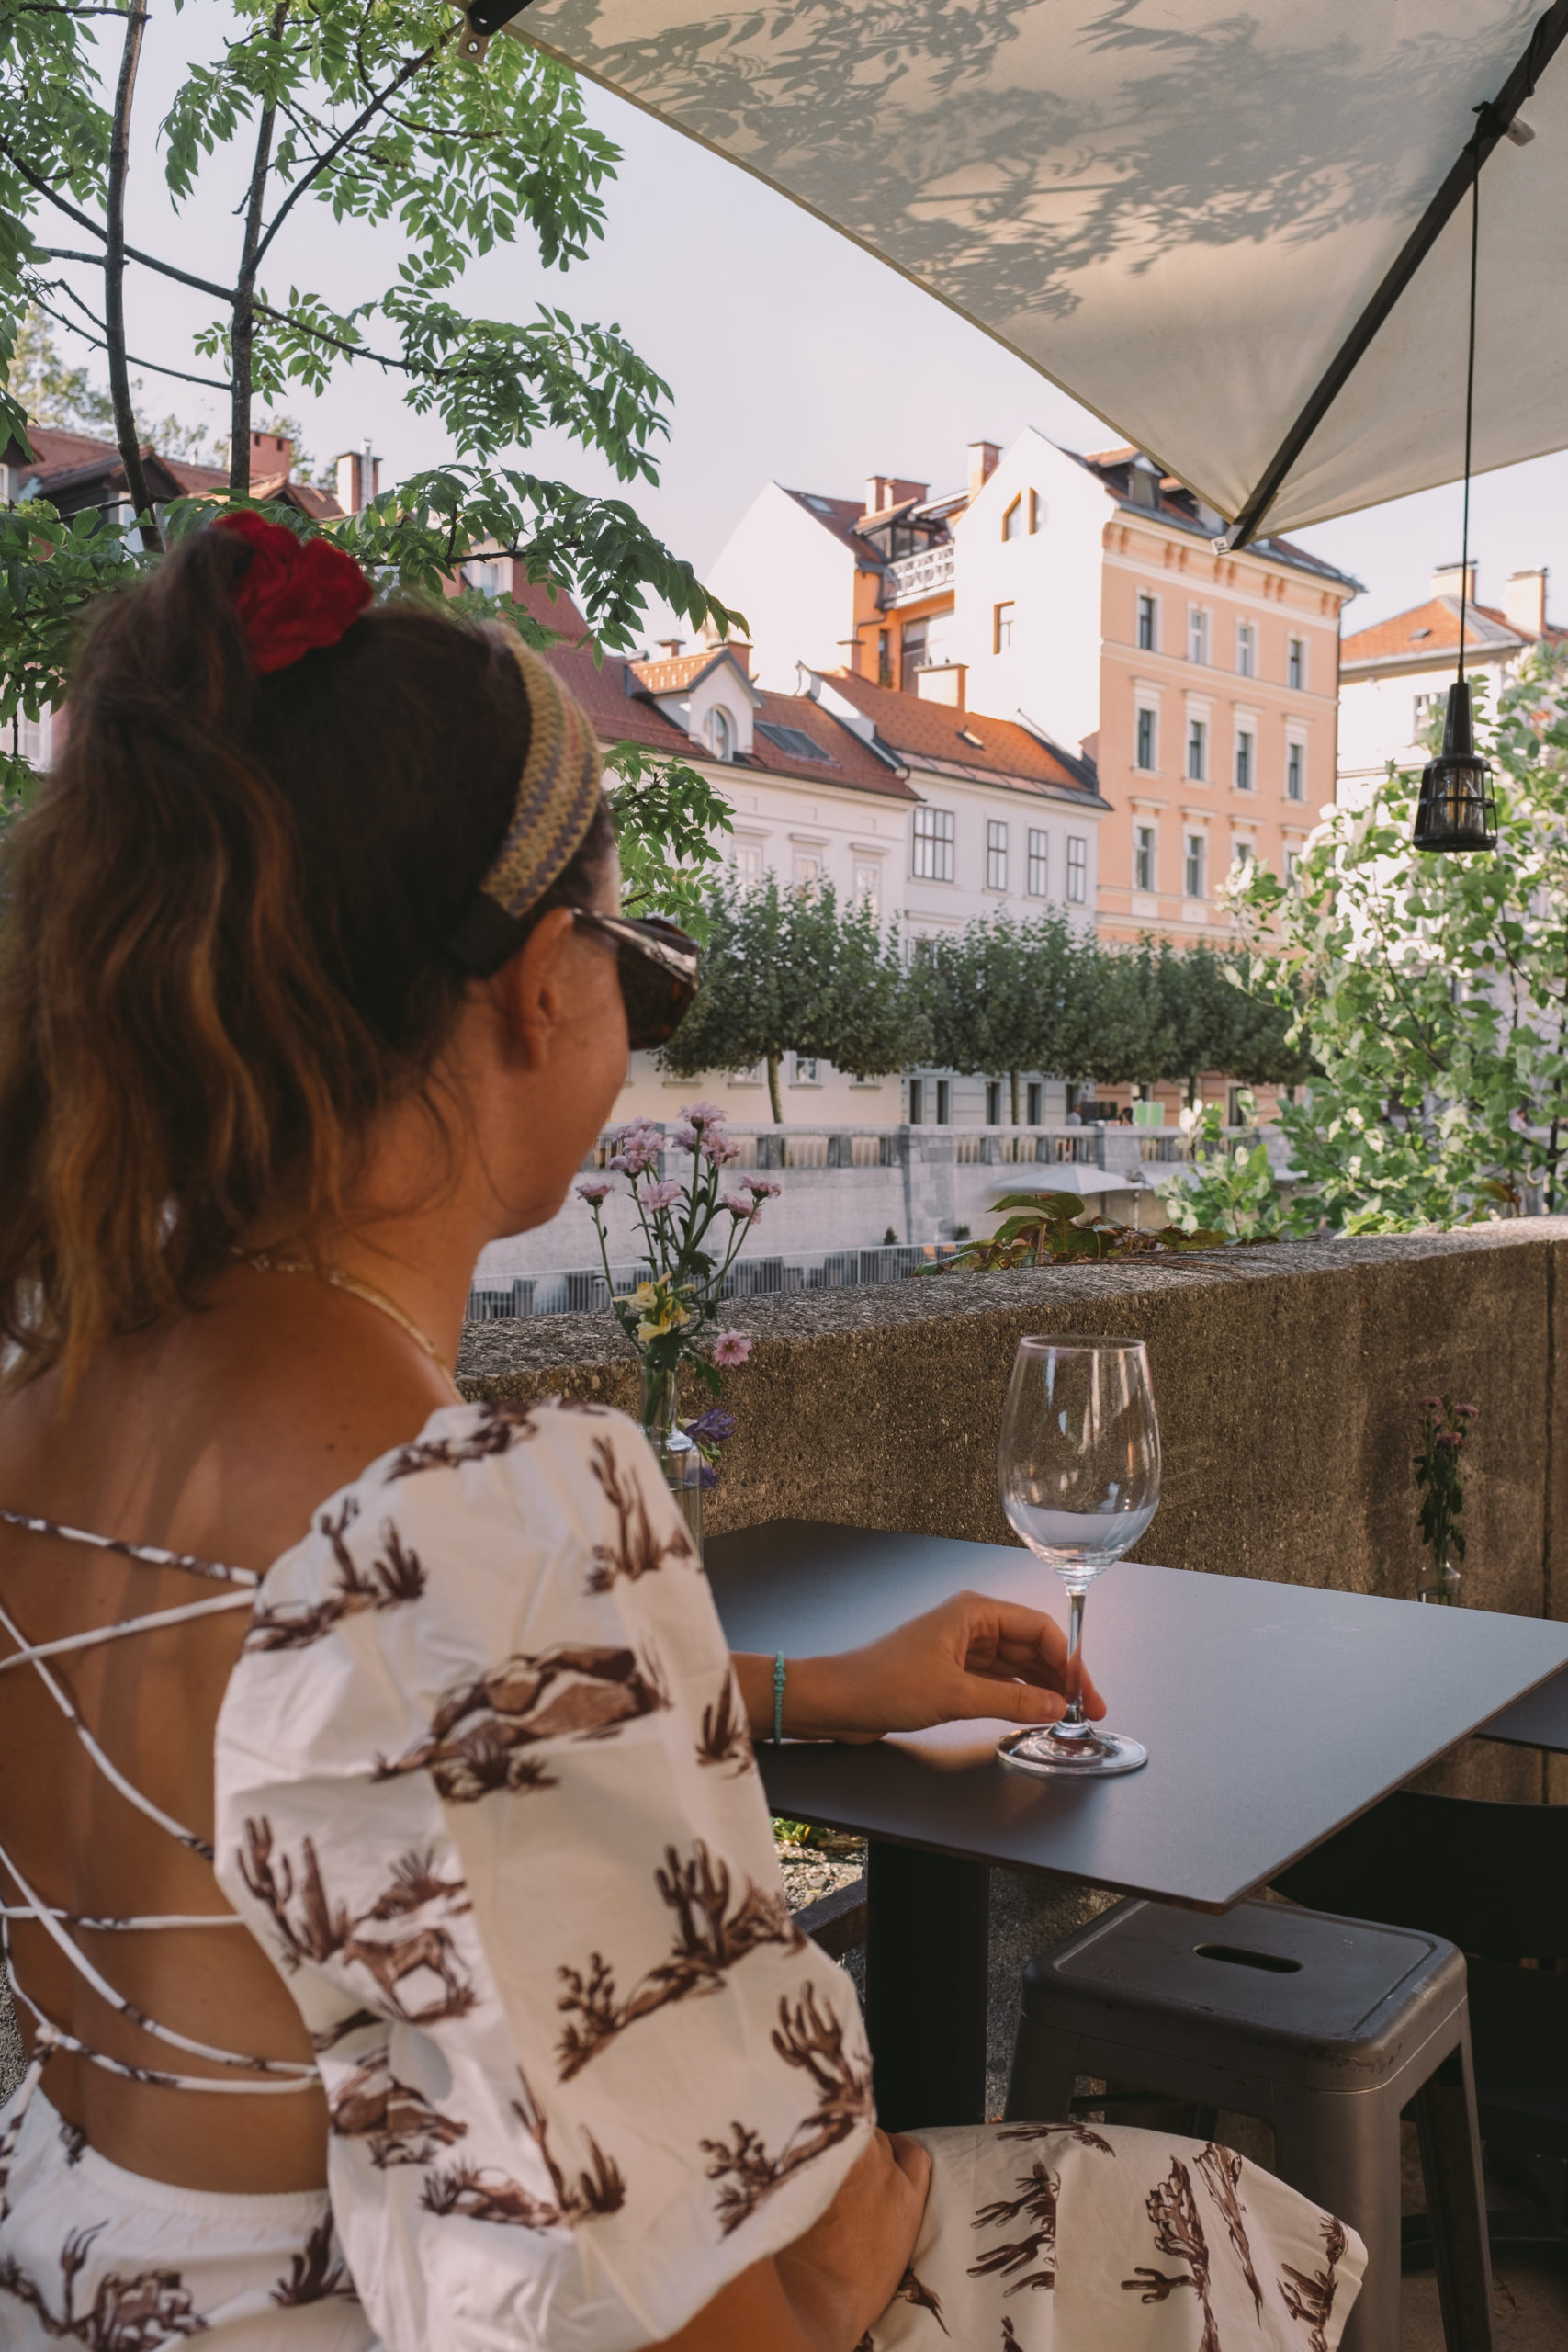 Ljubljana Slovenia's charming capital